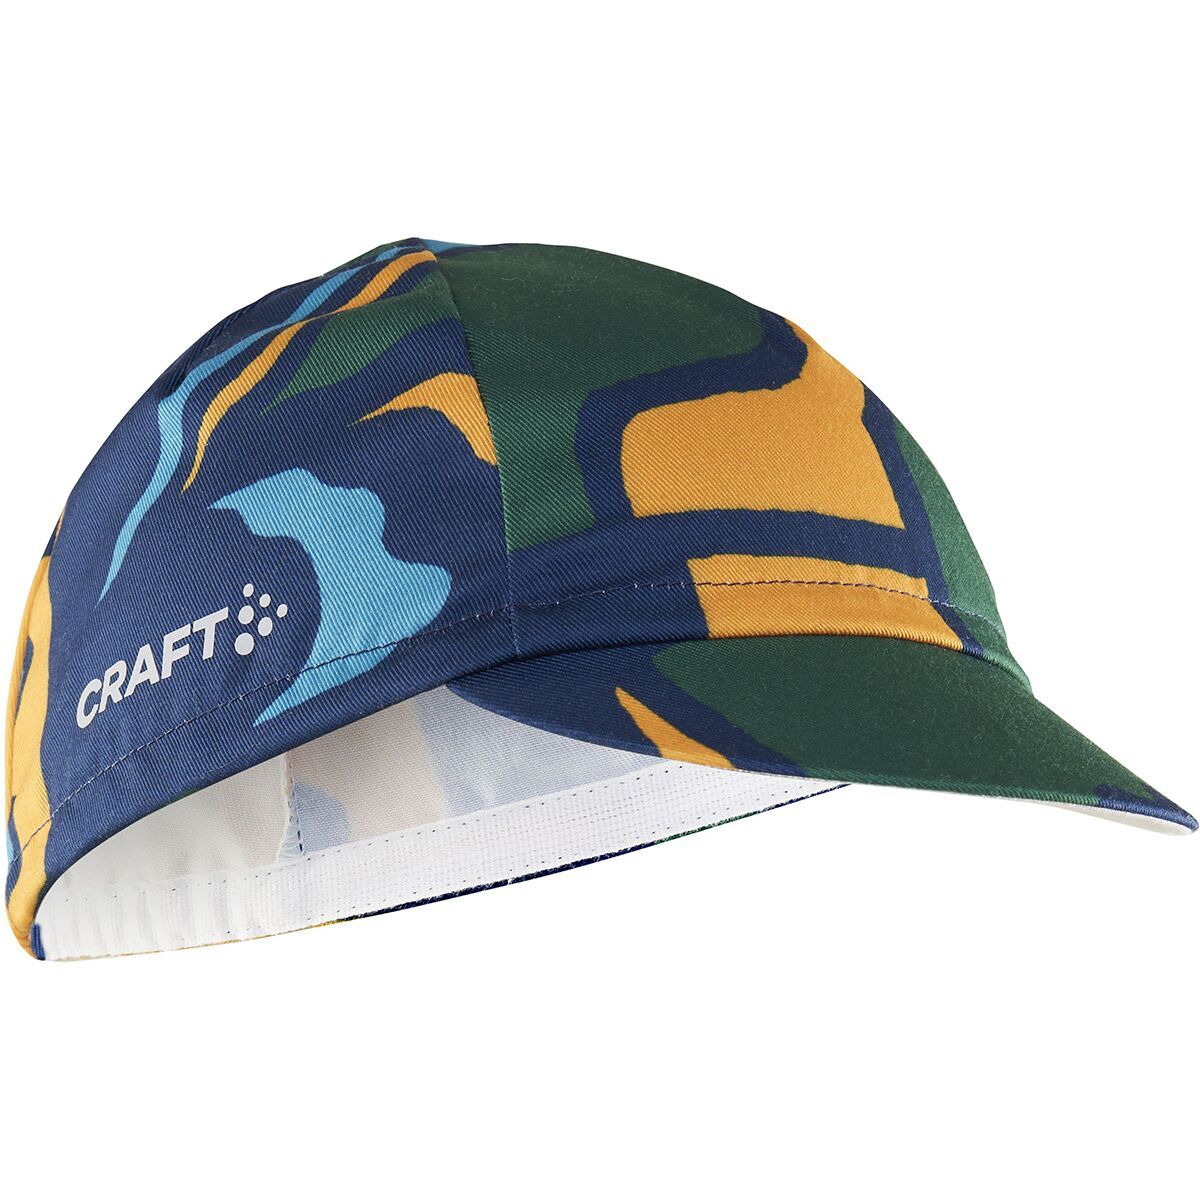 Summer Cycling Cap Hat Sunhat Suncap World Outdoor Sports Cloth Cap Multi-colord 